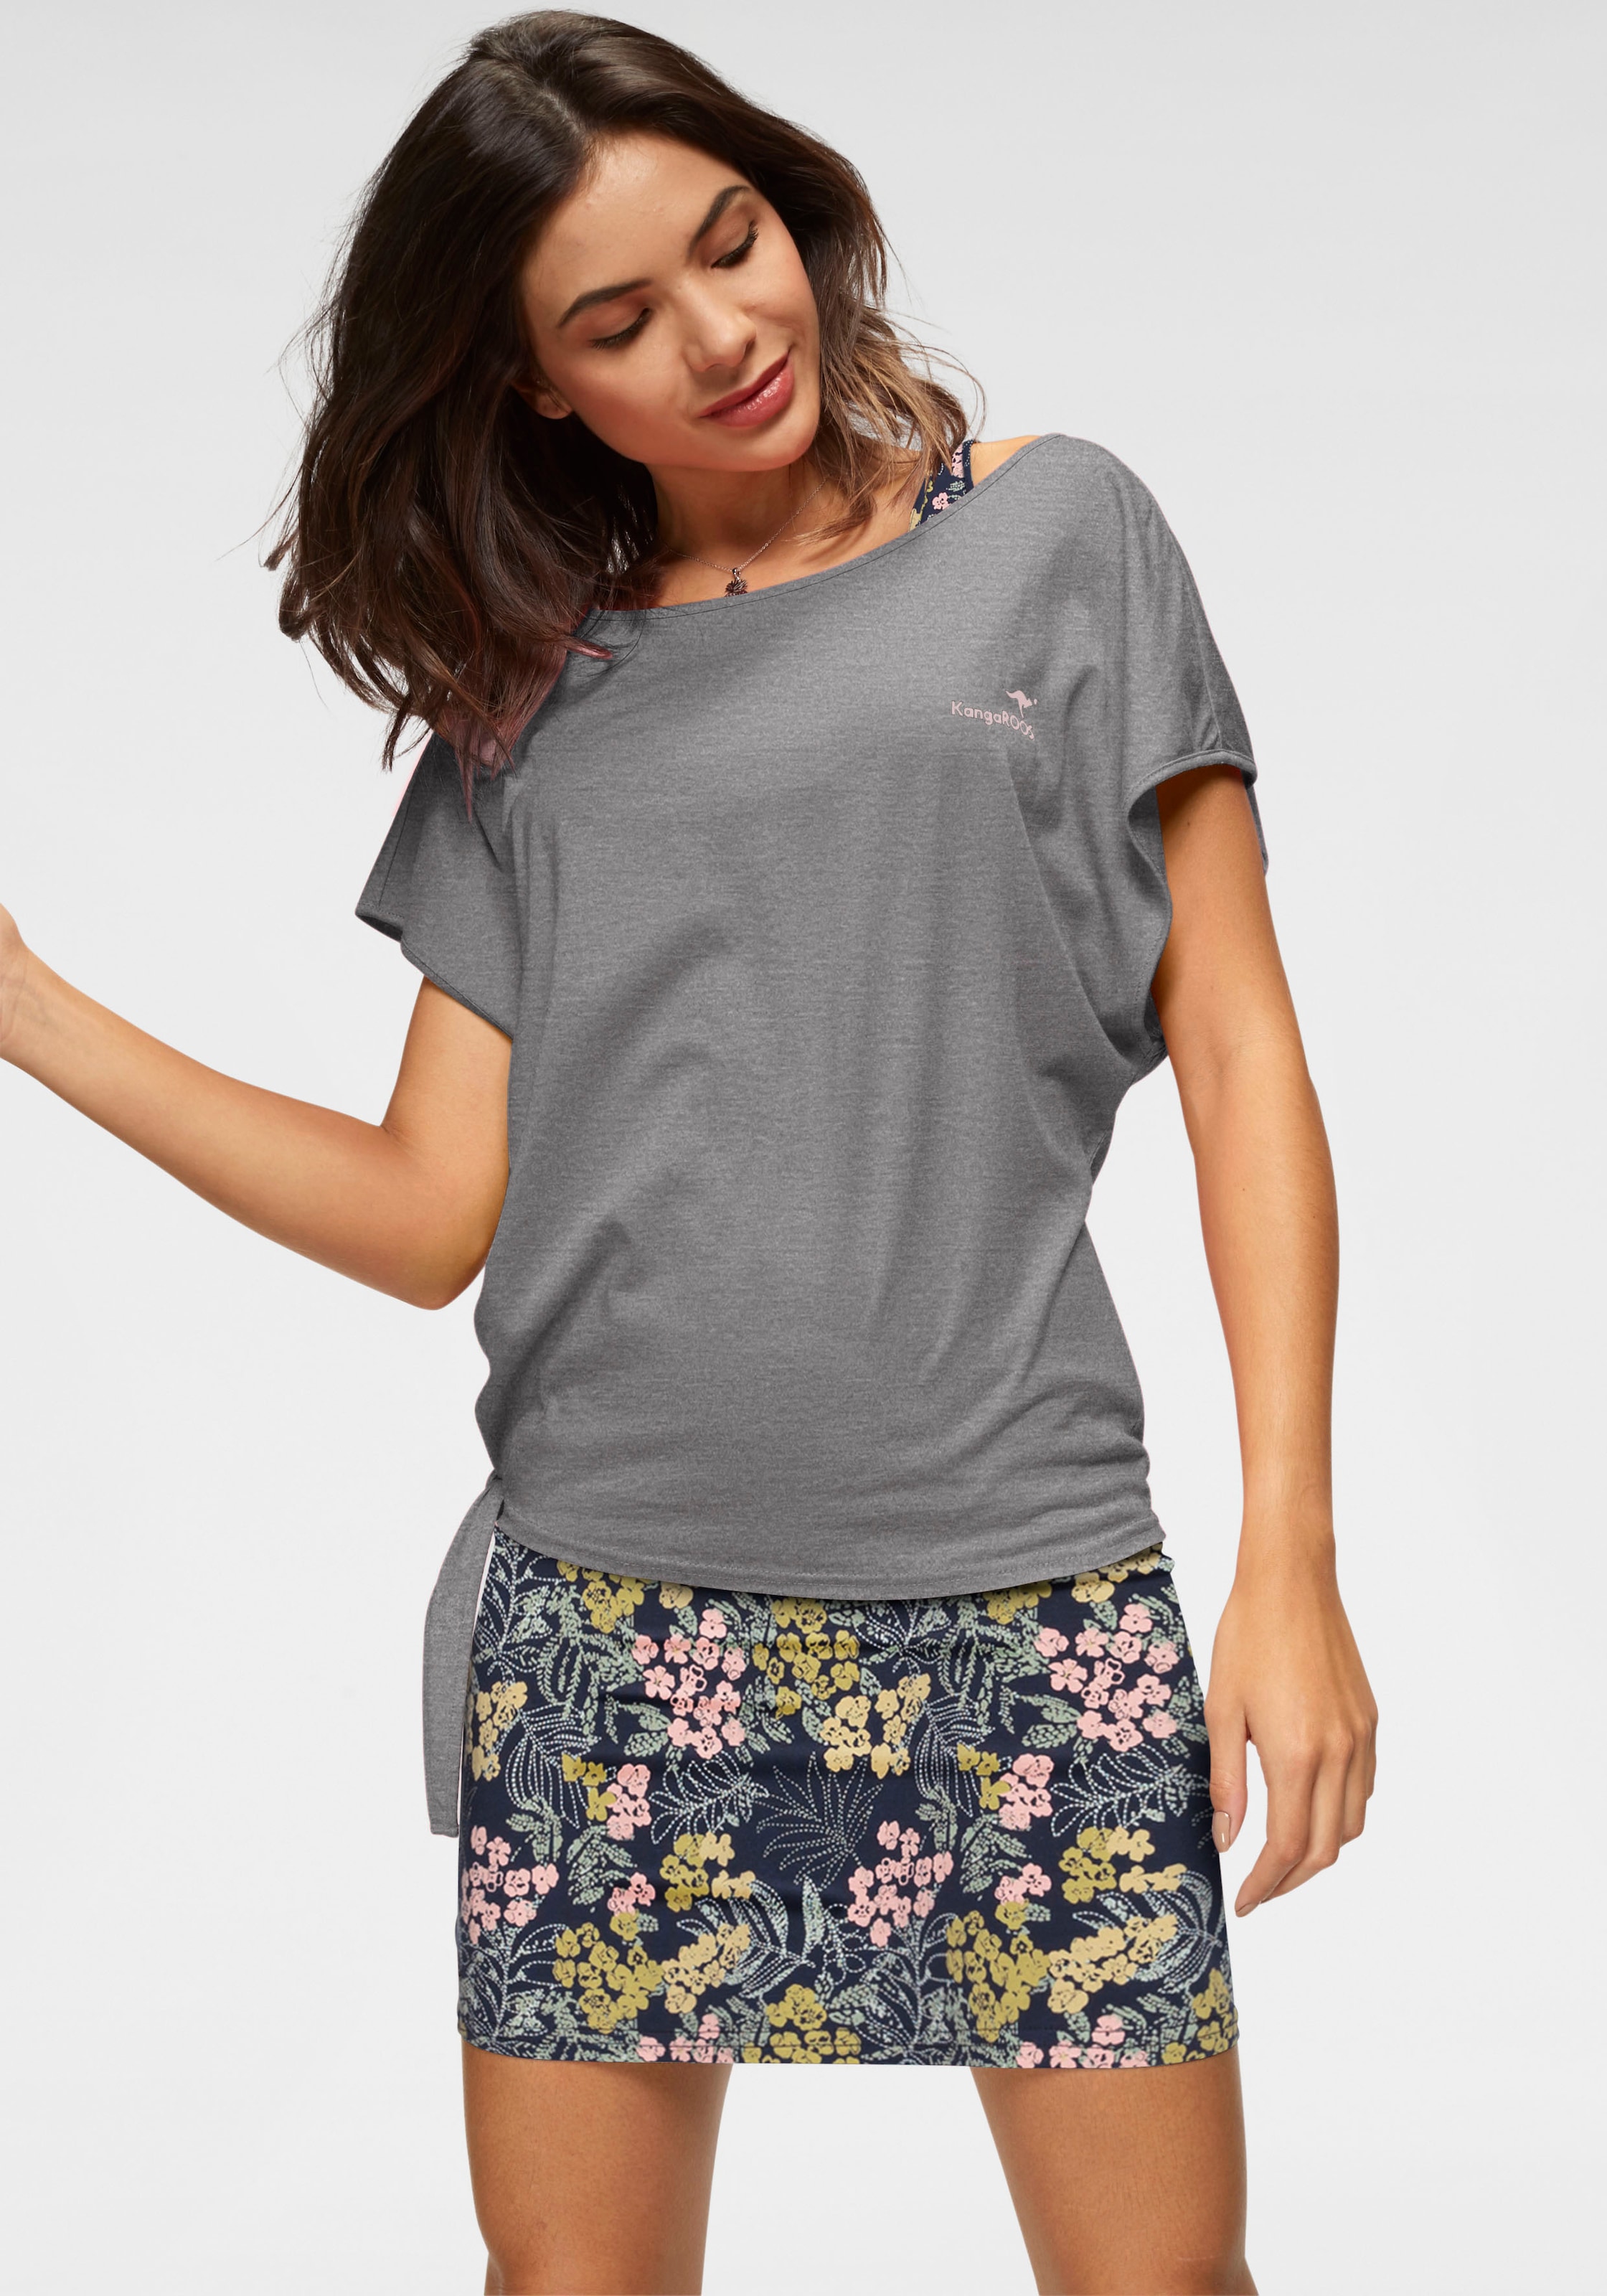 KangaROOS Sommerkleid, (Set, 2 tlg., mit T-Shirt), Set Shirt Kleid mit Blumen